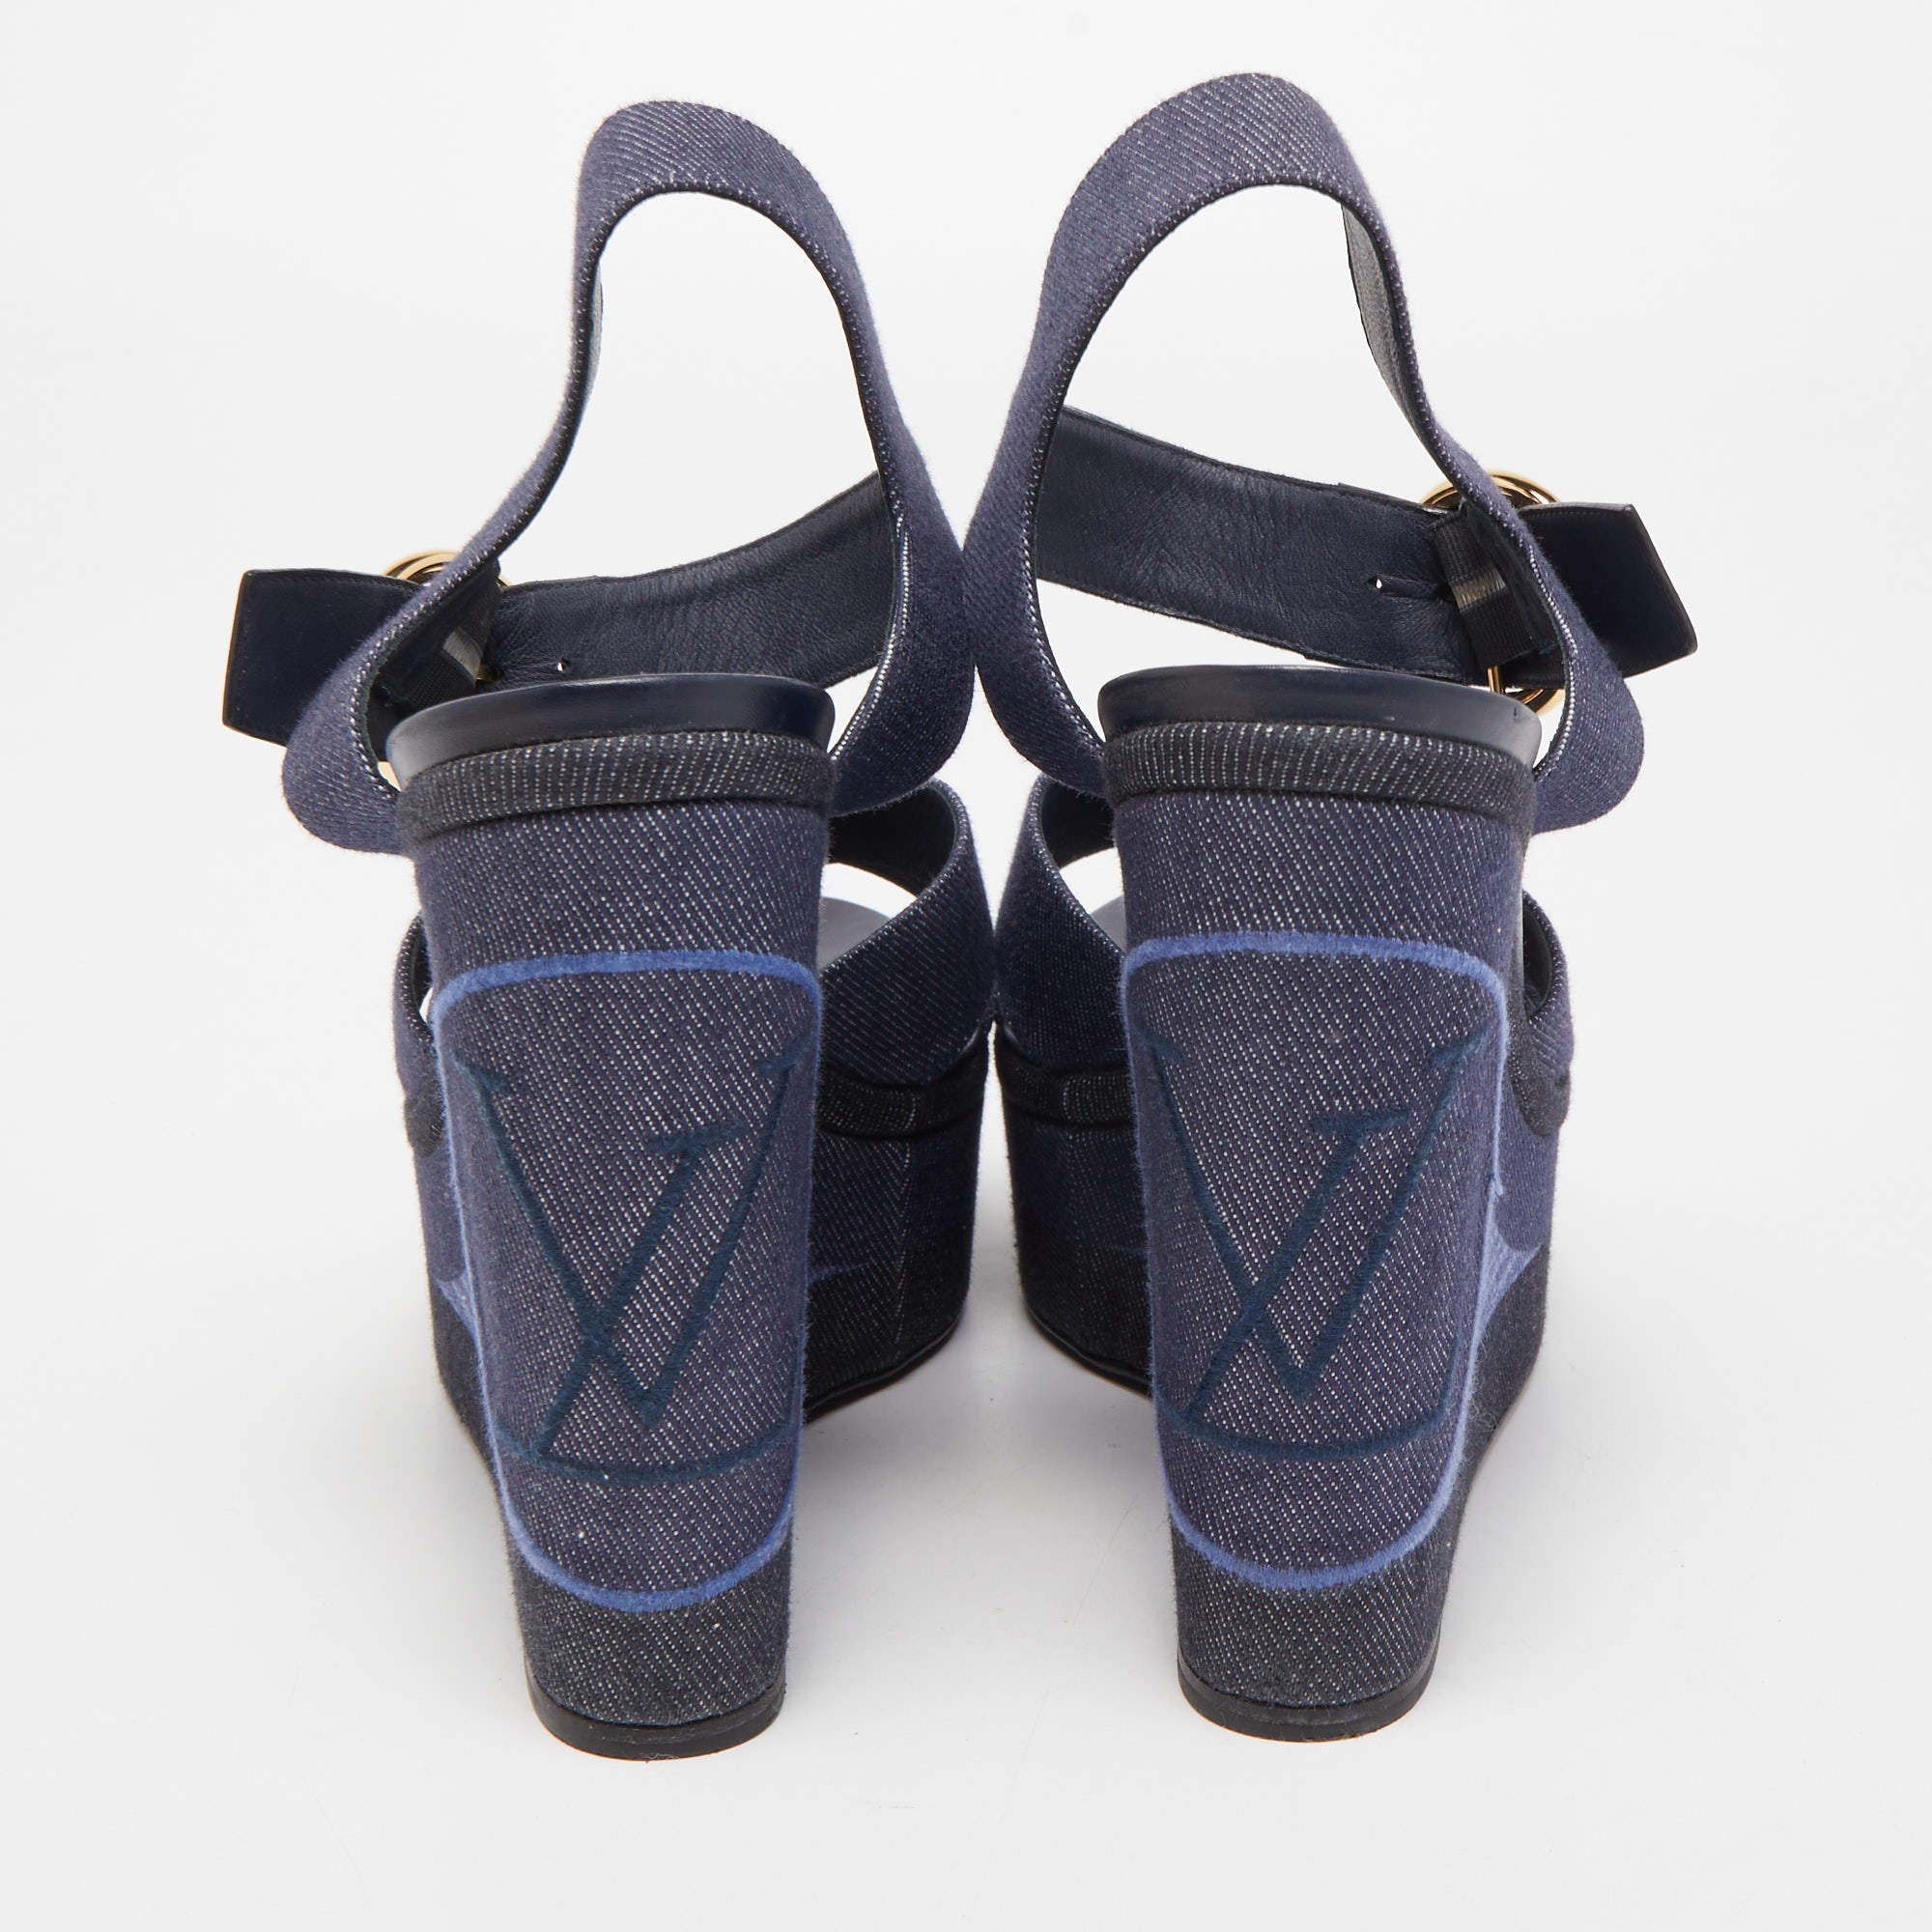 Louis Vuitton Navy Blue Denim Wedge Sandals Size 35 Louis Vuitton